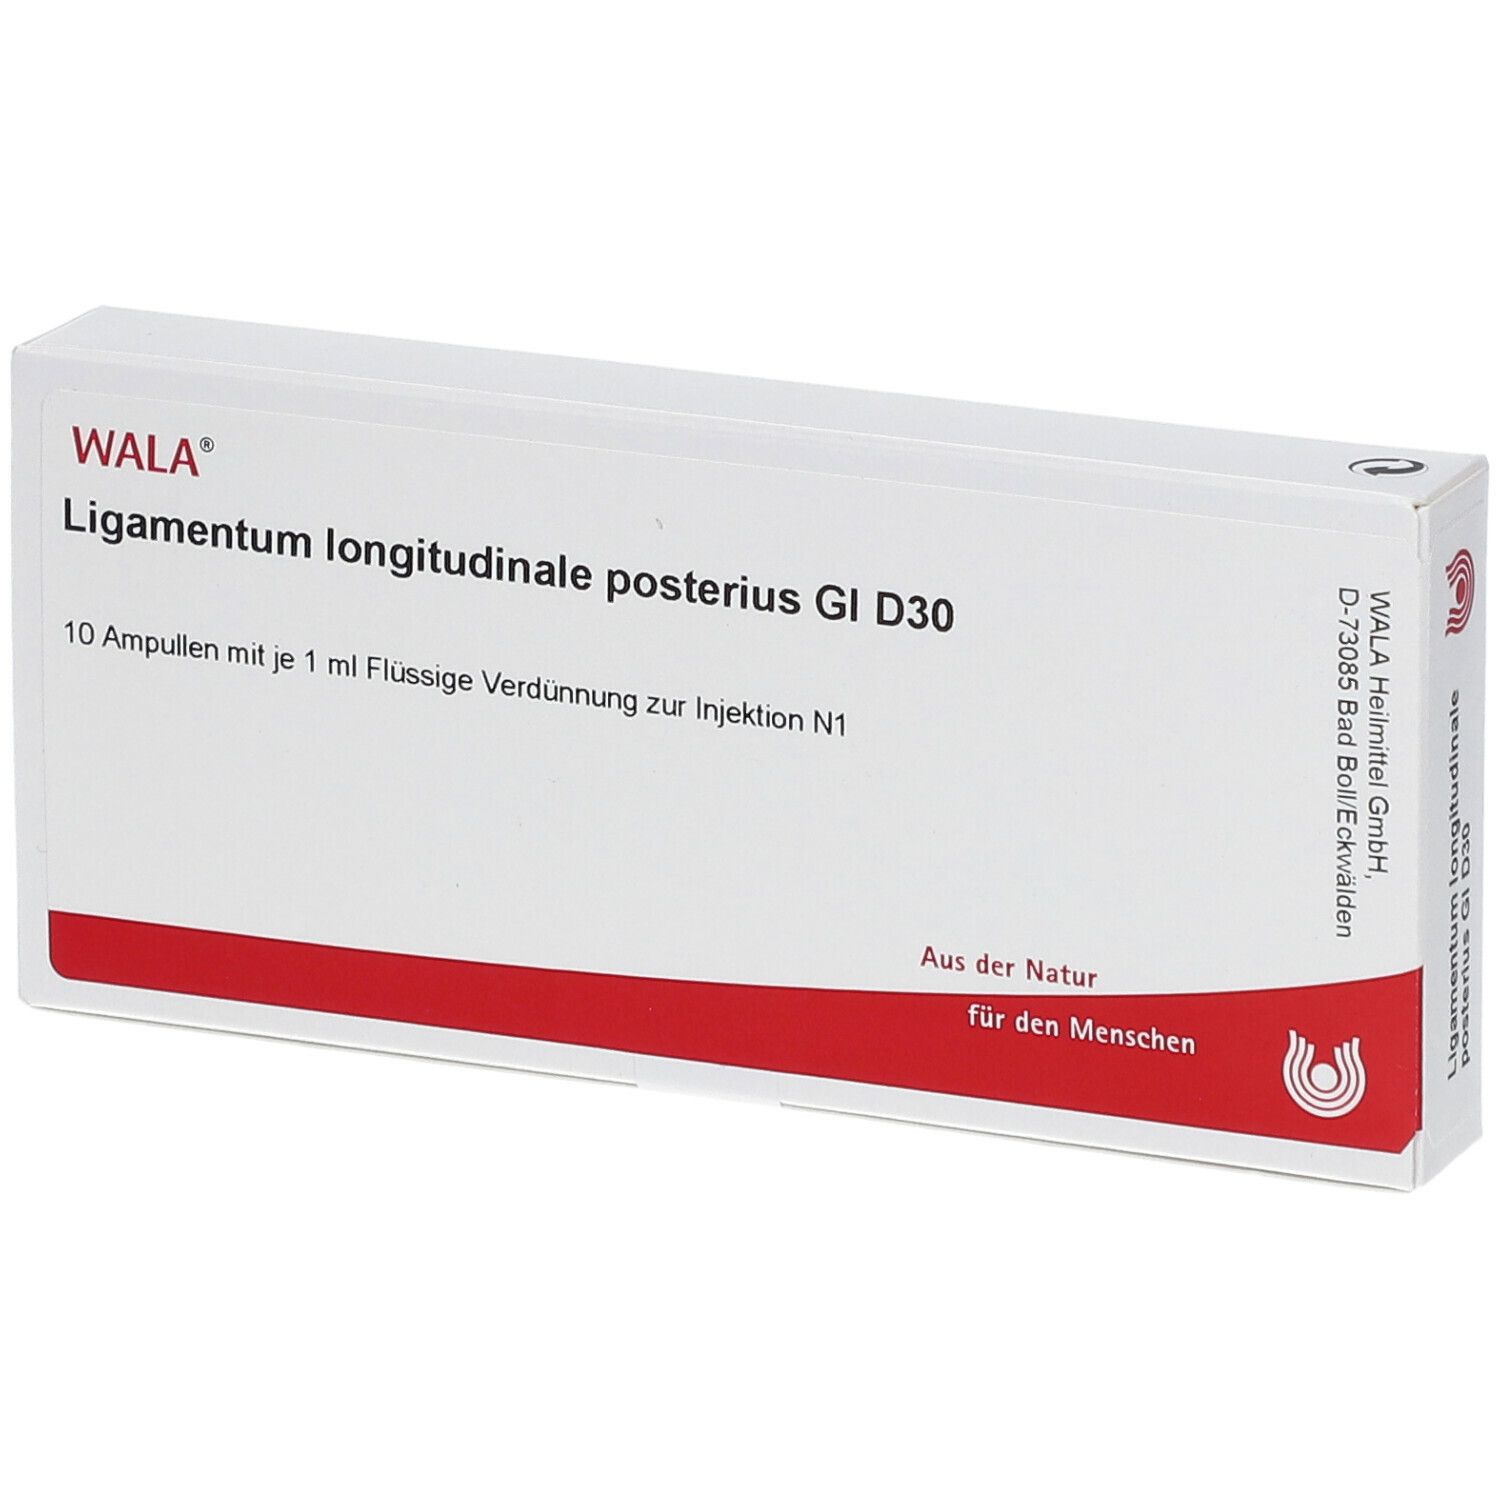 Wala® Ligamentum longitudinale posterius Gl D 30